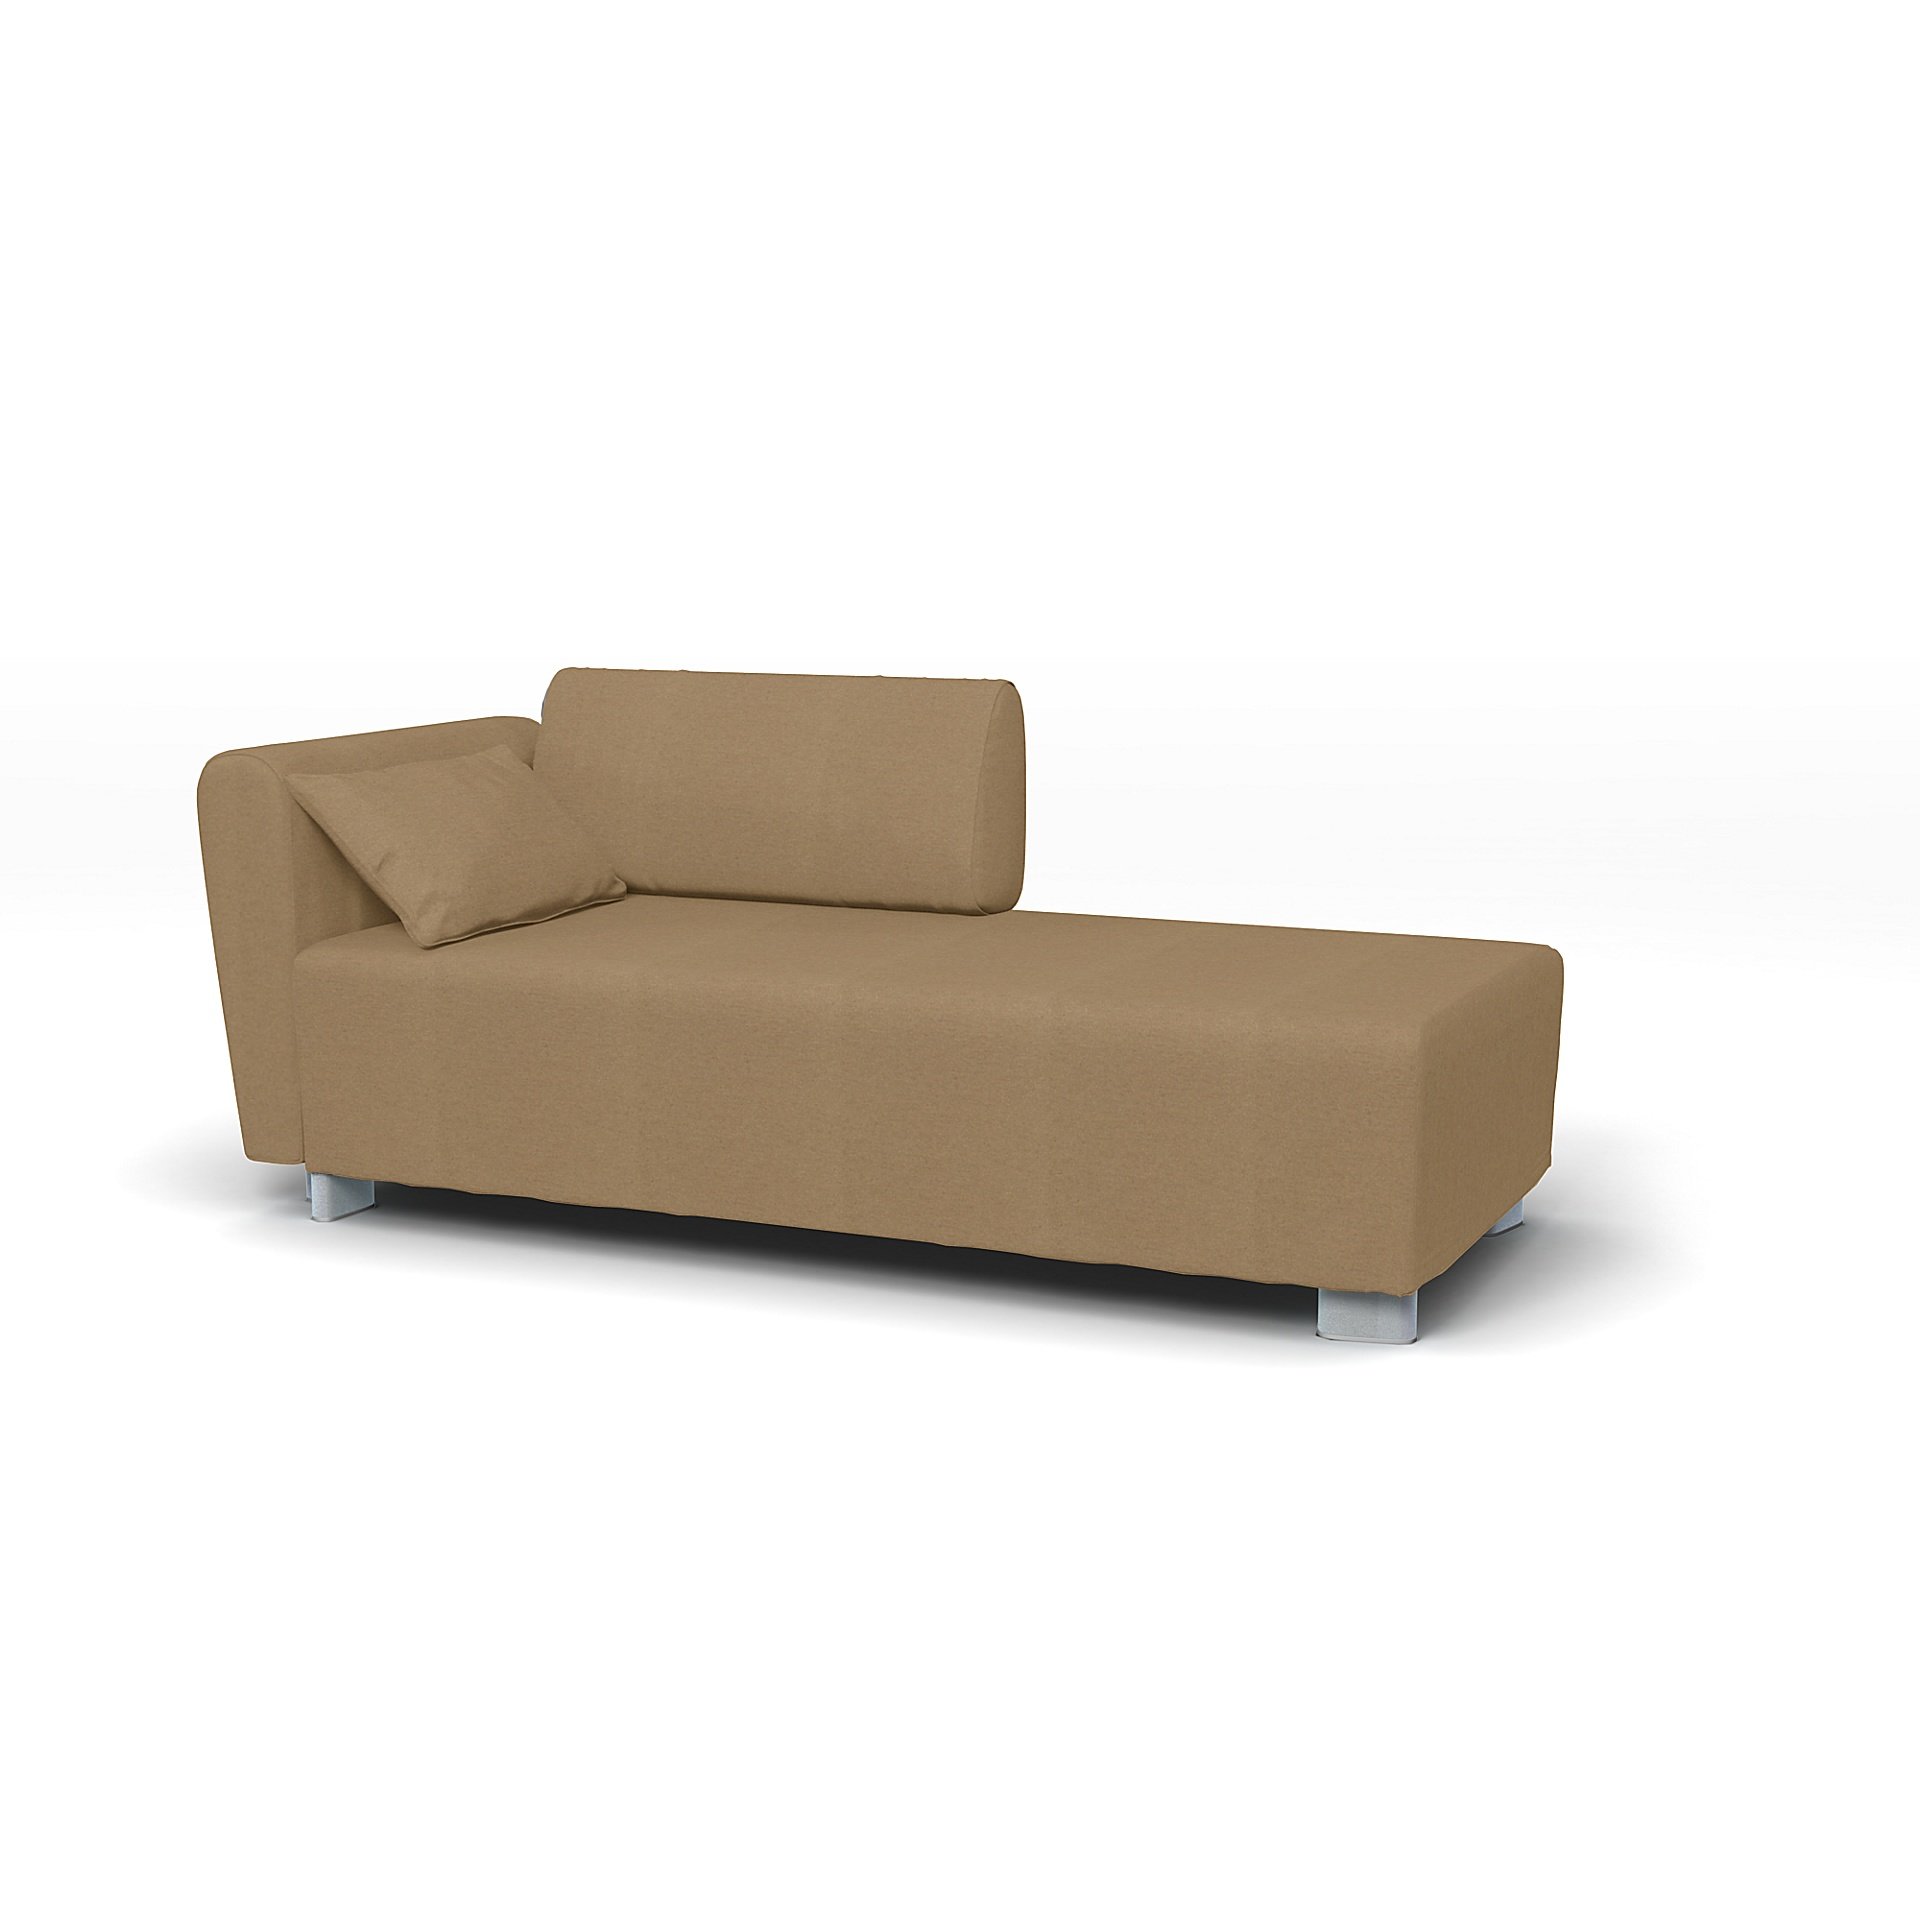 IKEA - Mysinge Chaise Longue with Armrest Cover, Sand, Wool - Bemz